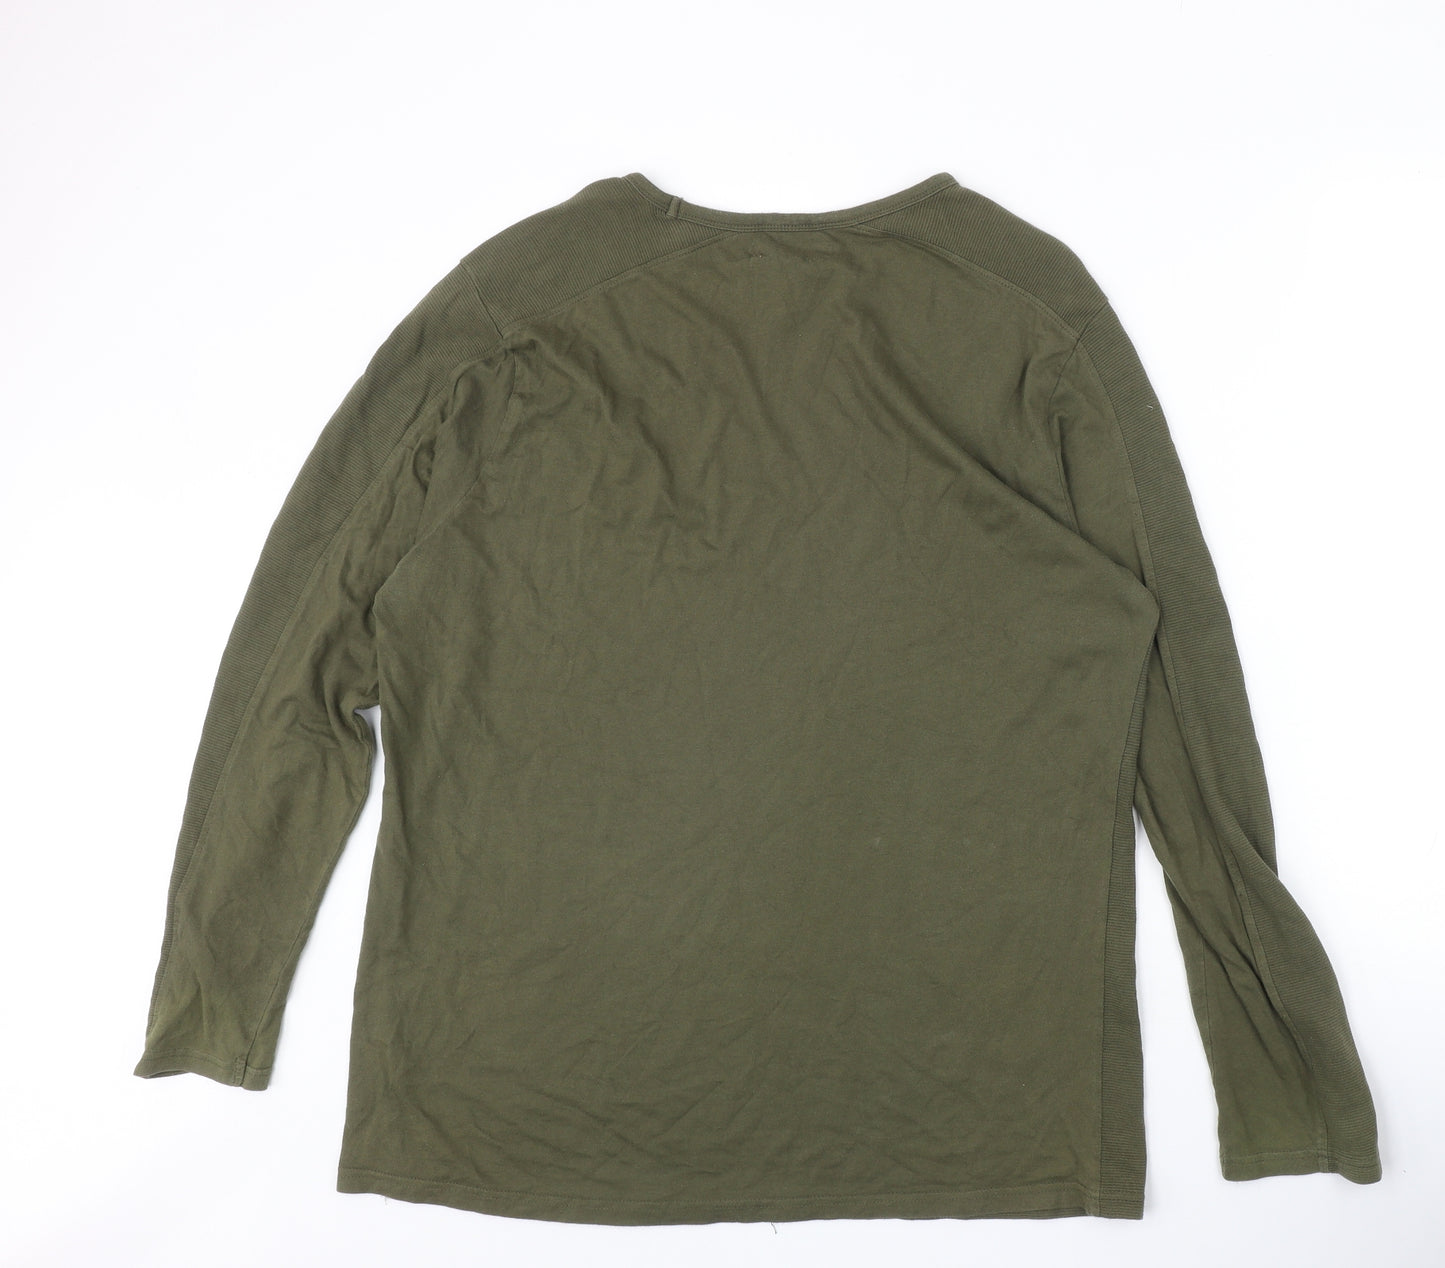 Cedar Wood State Mens Green Cotton T-Shirt Size XL Round Neck